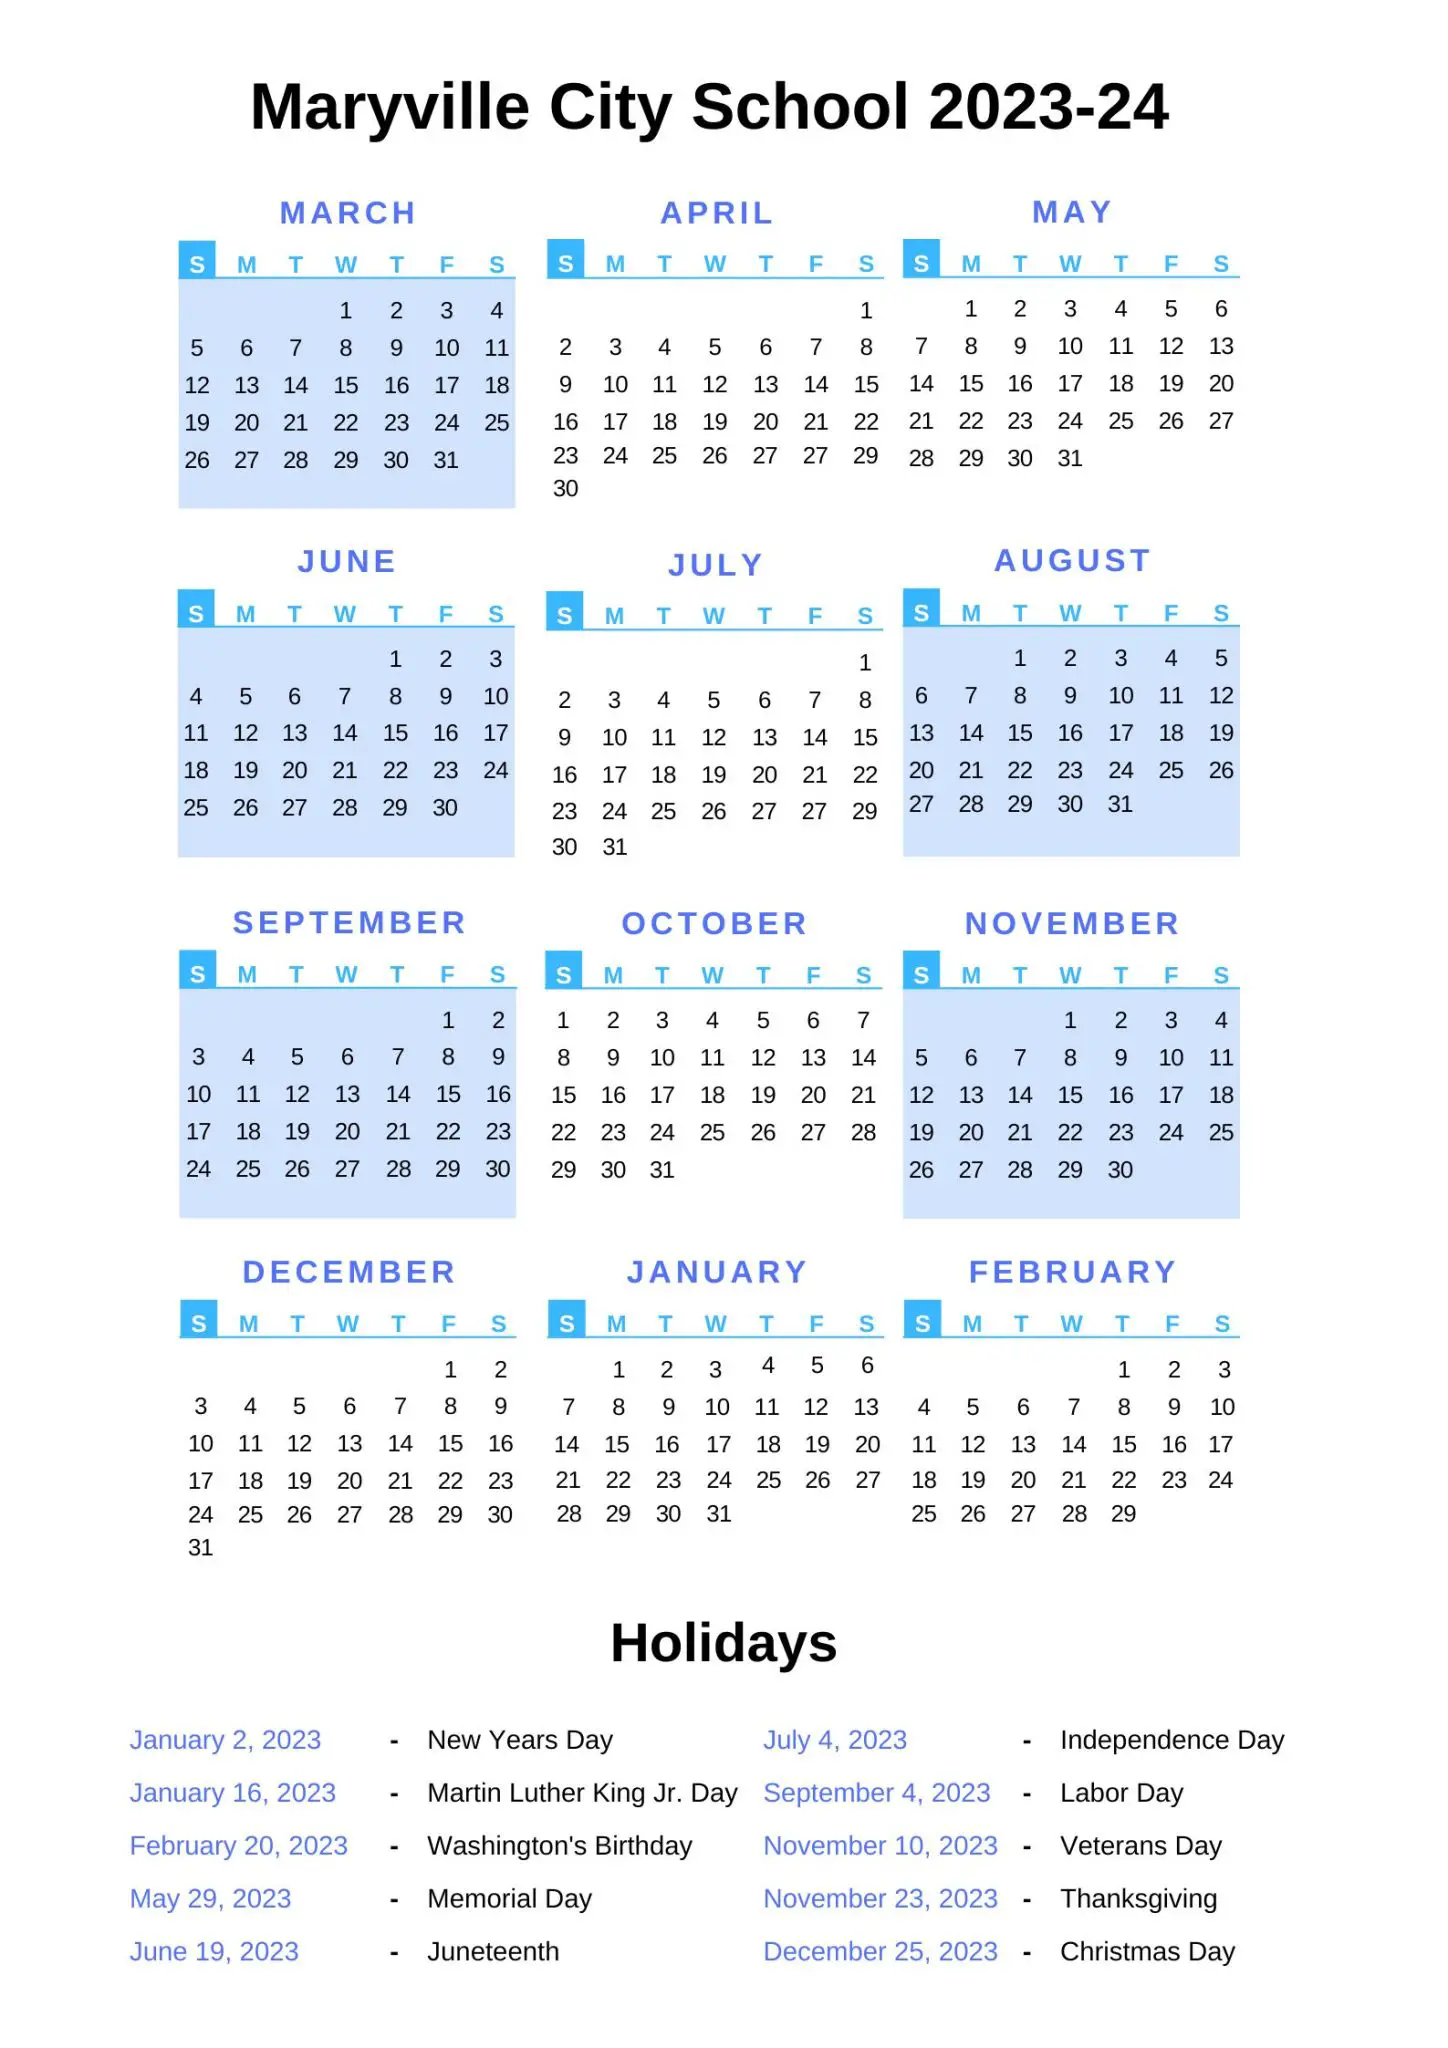 Maryville City Schools Calendar 2023 24 With Holidays